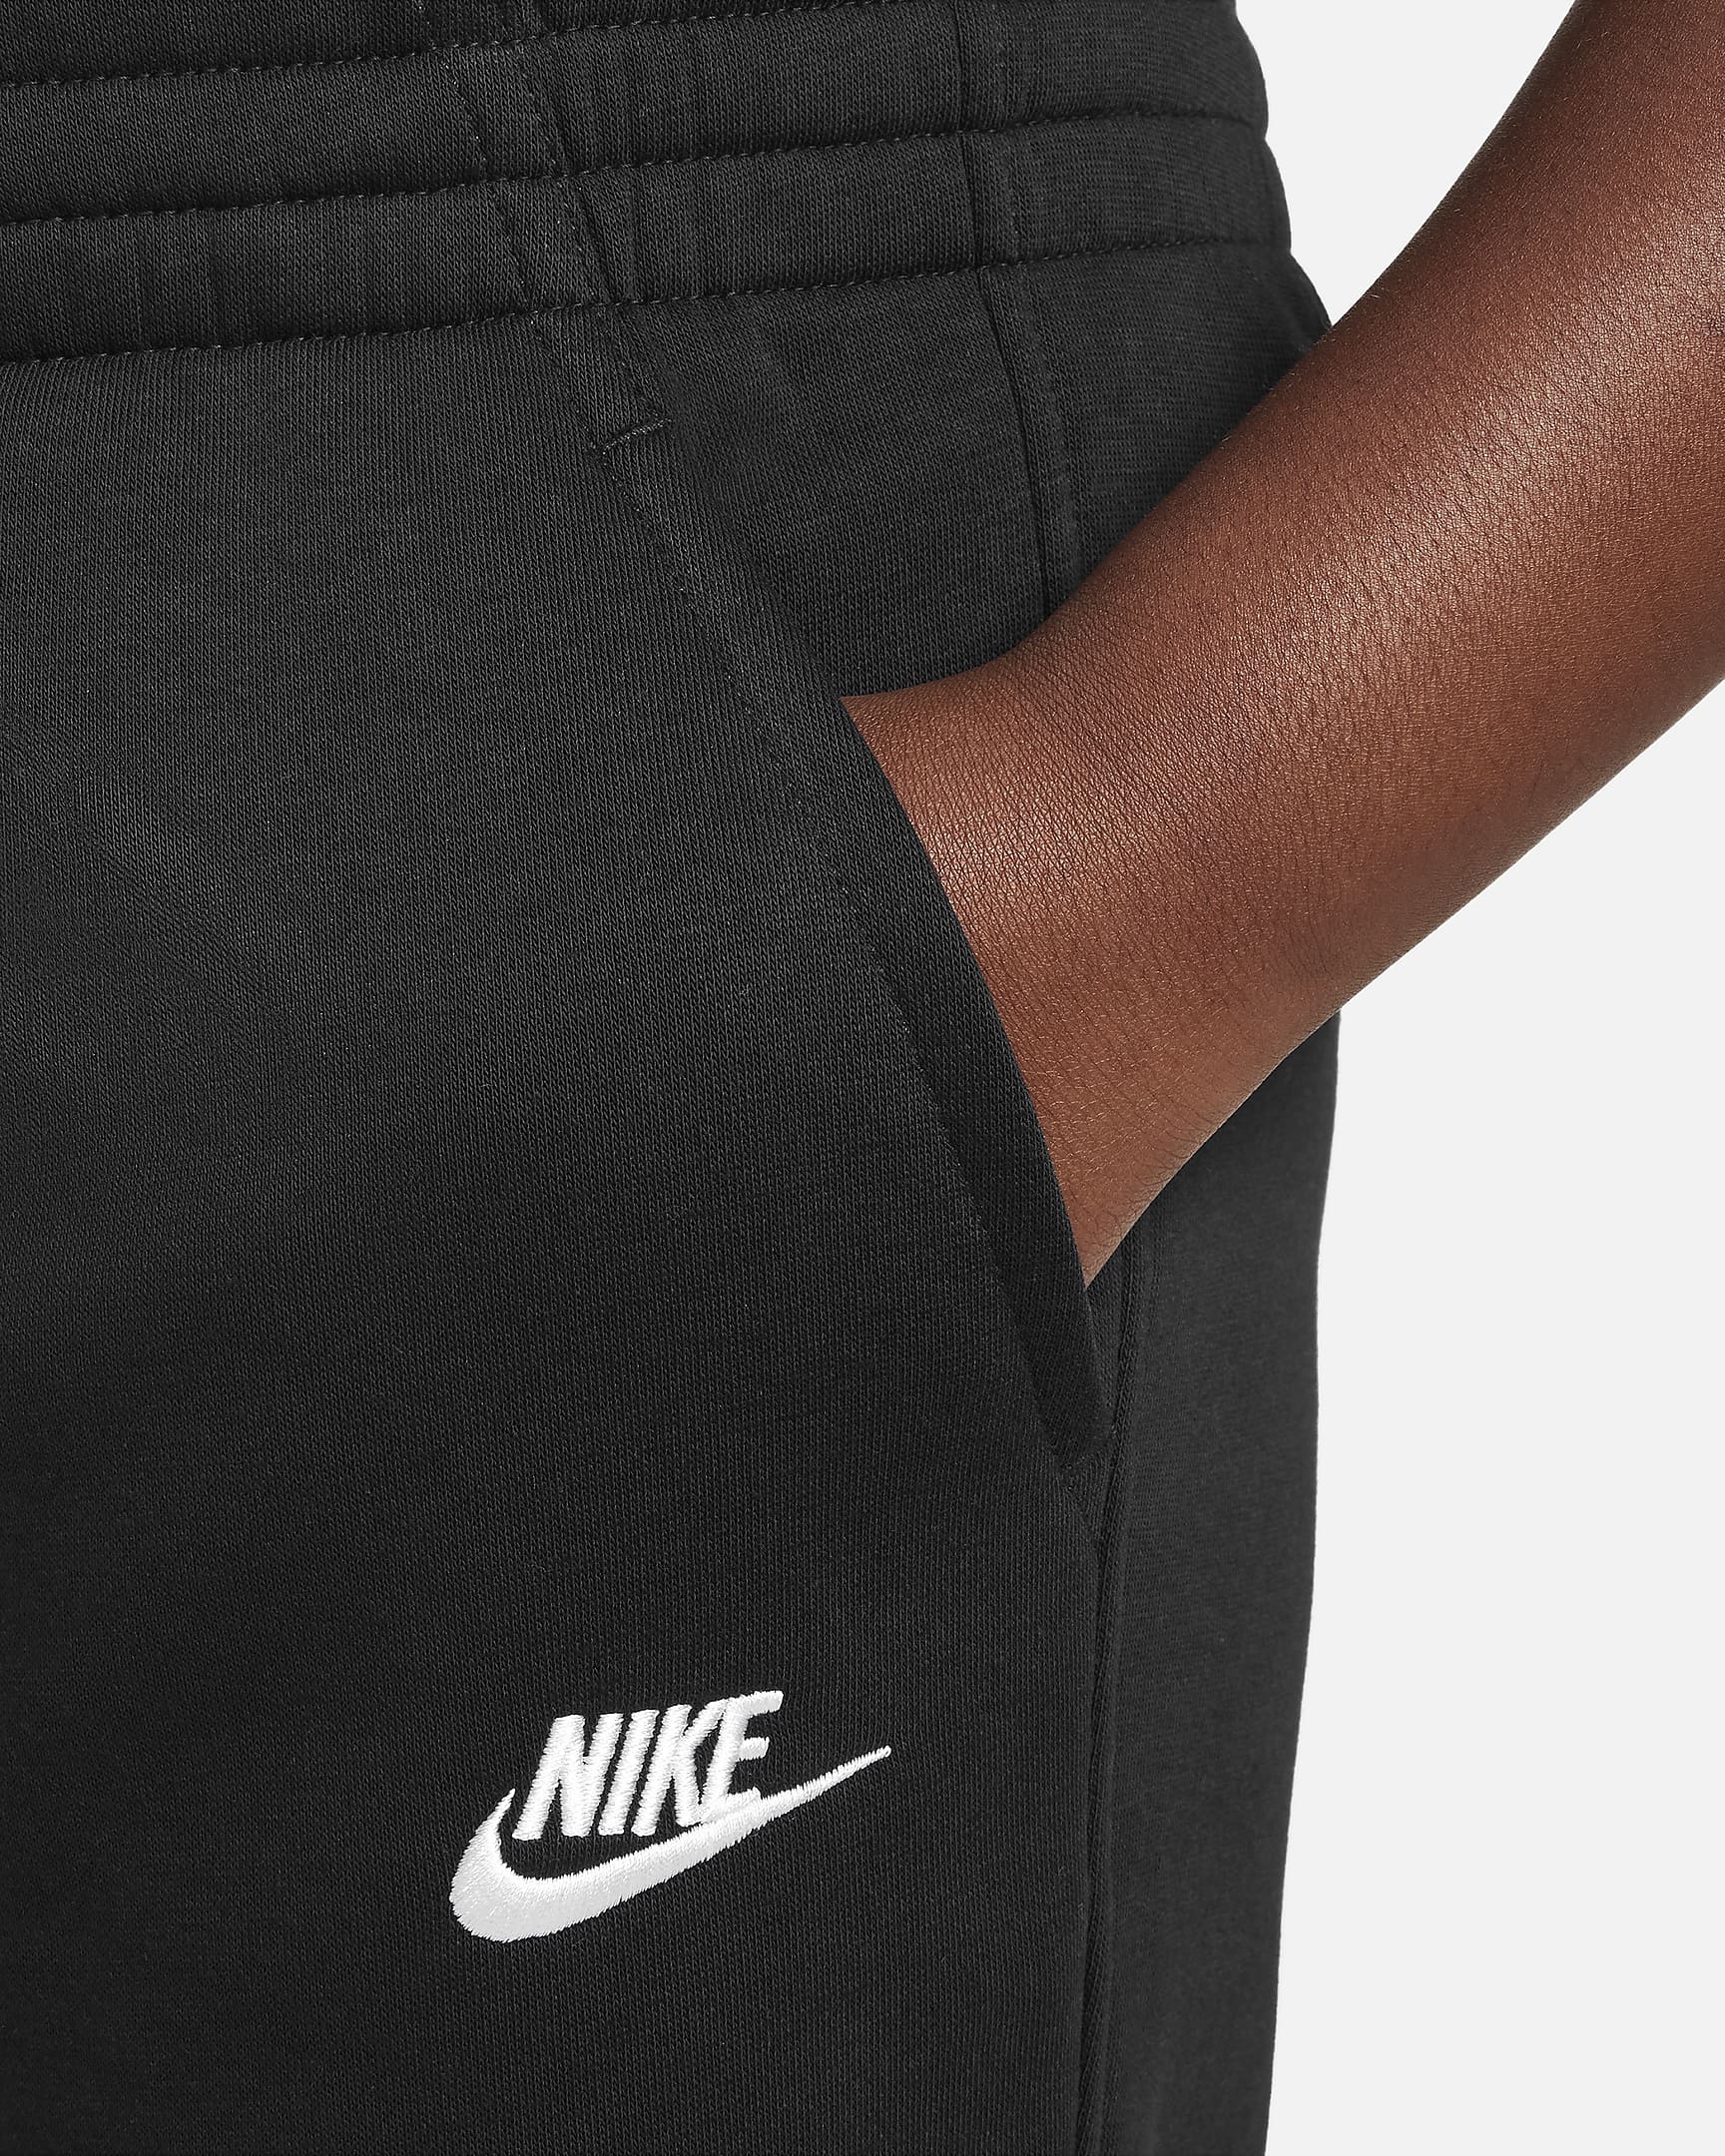 Pantaloni jogger Nike Sportswear Club Fleece (Taglia grande) – Ragazzo/a - Nero/Bianco